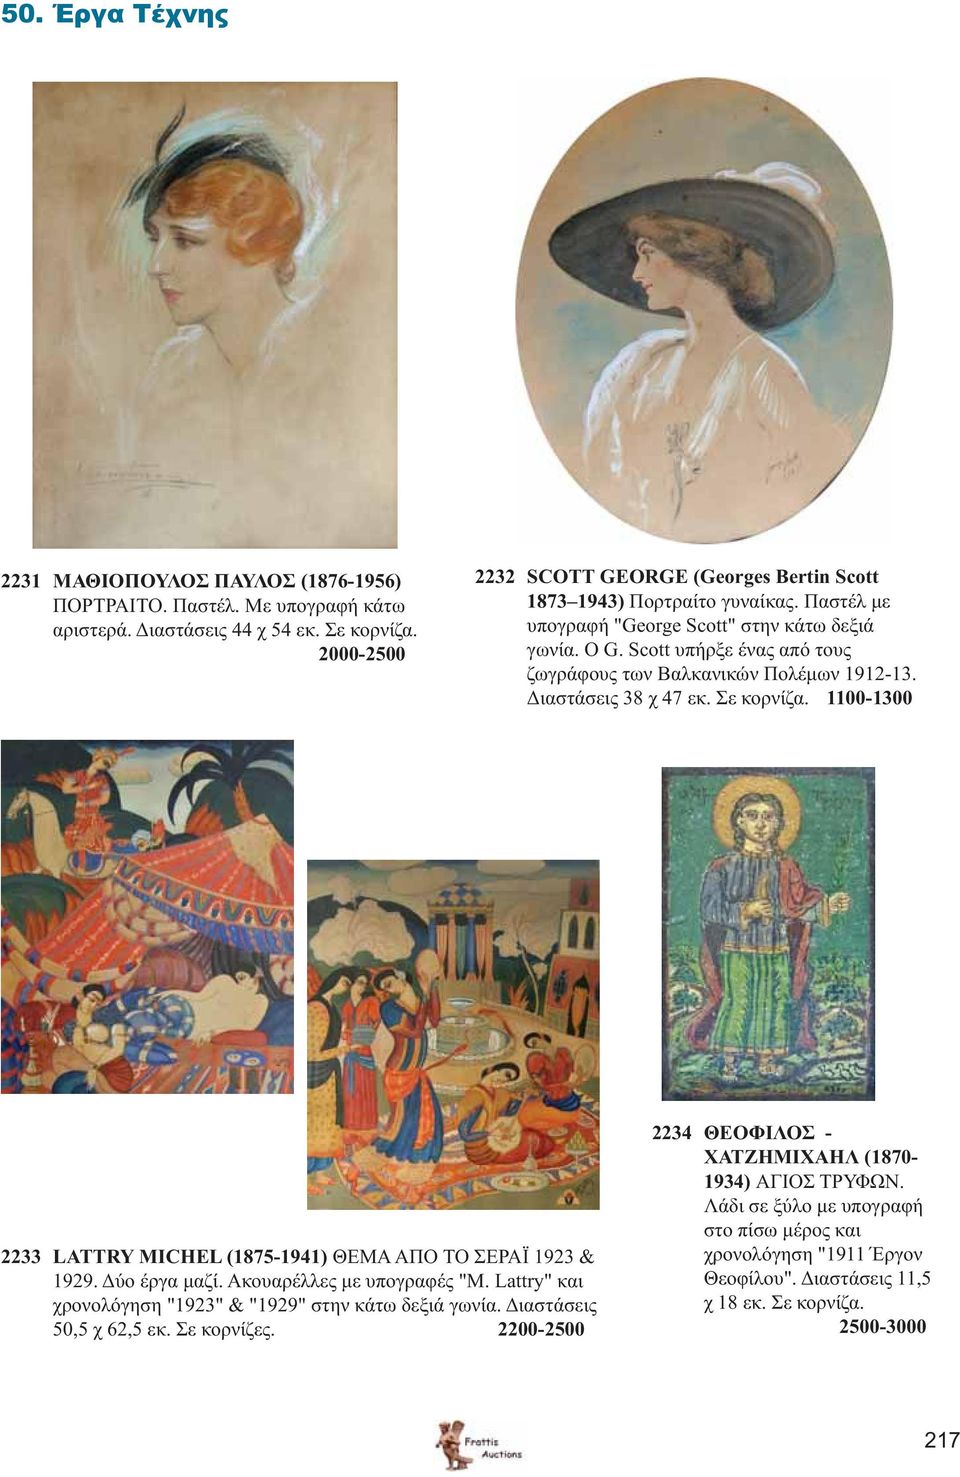 Scott υπήρξε ένας από τους ζωγράφους των Βαλκανικών Πολέμων 1912-13. Διαστάσεις 38 χ 47 εκ. Σε κορνίζα. 1100-1300 2233 LATTRY MICHEL (1875-1941) ΘΕΜΑ ΑΠΟ ΤΟ ΣΕΡΑΪ 1923 & 1929. Δύο έργα μαζί.